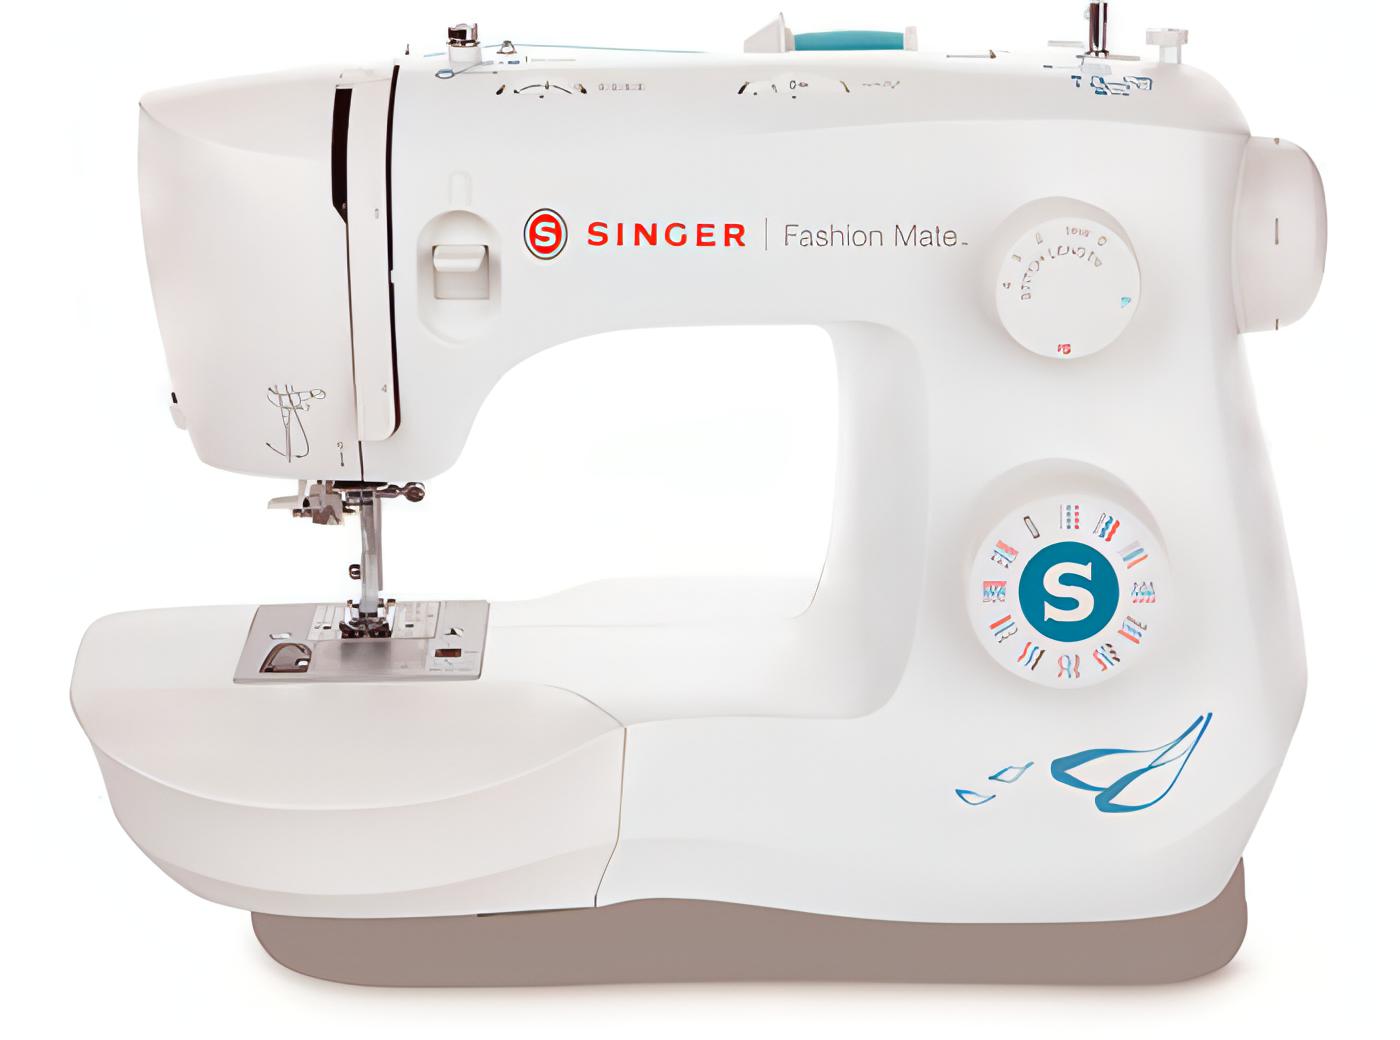 Singer Fashion Mate 3342 Sewing Machine - Good as New